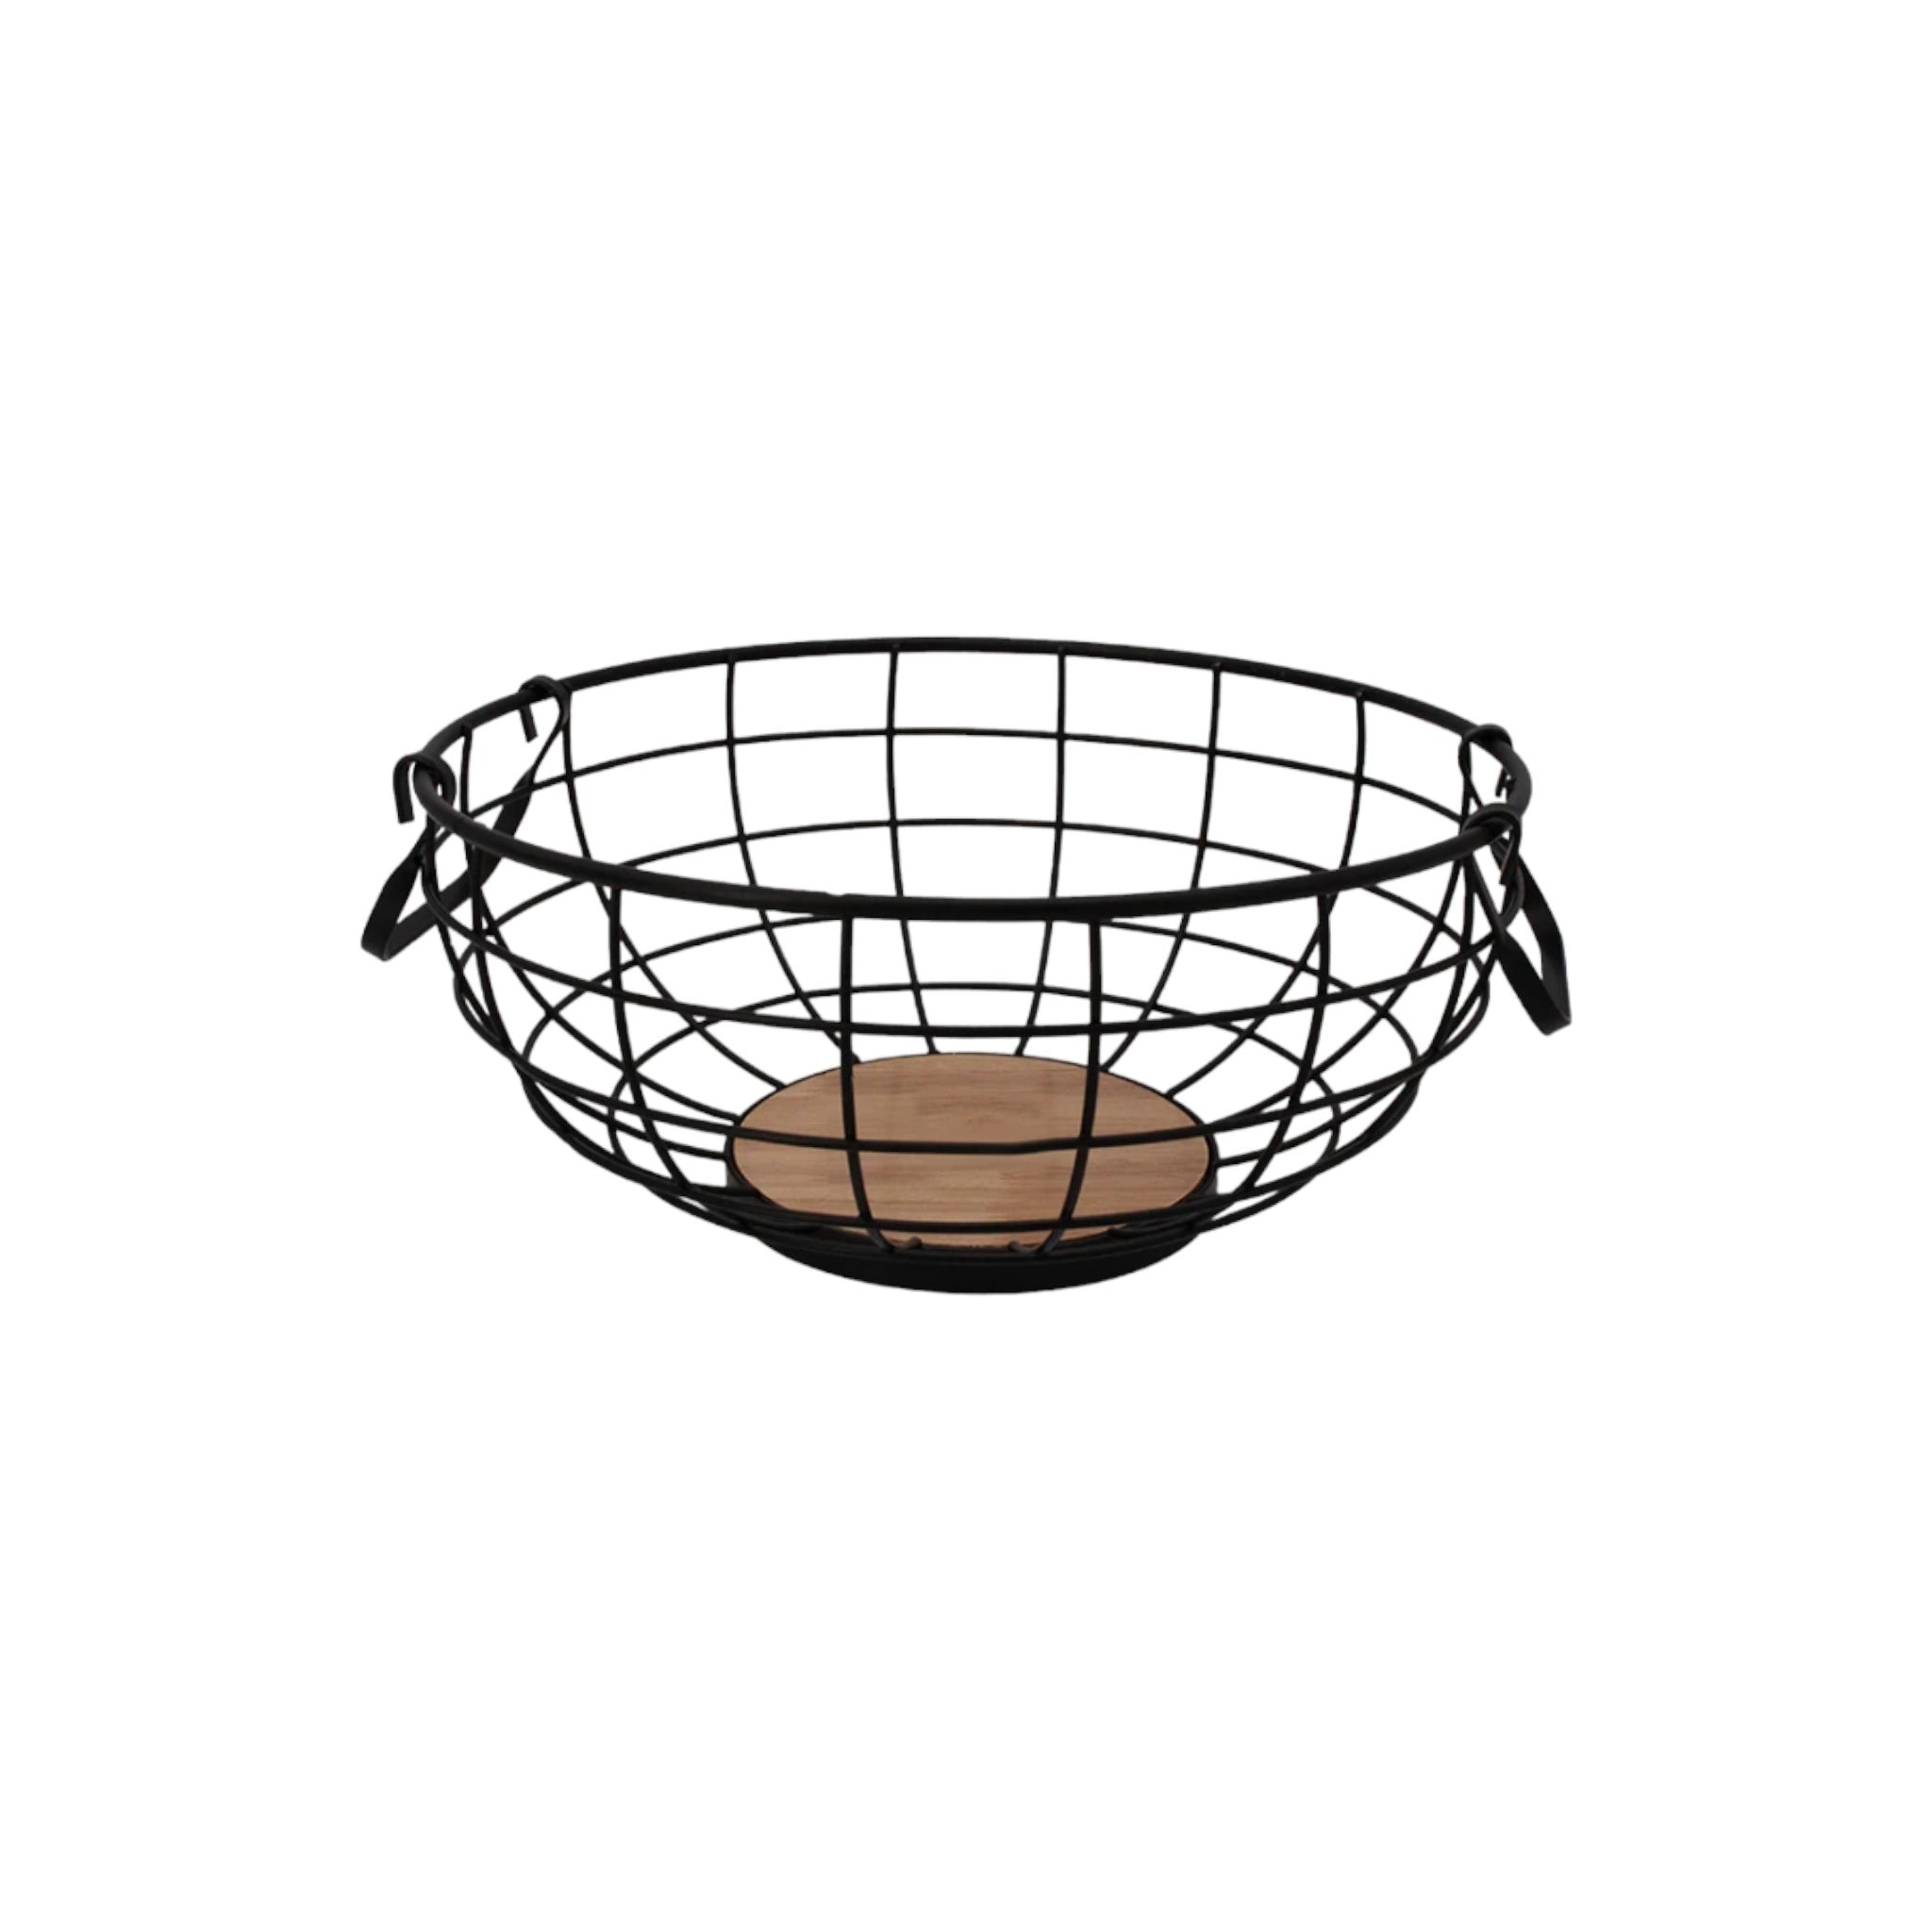 Regent Fruit basket with Handle Black wire and Wood 120X280mm Diameter